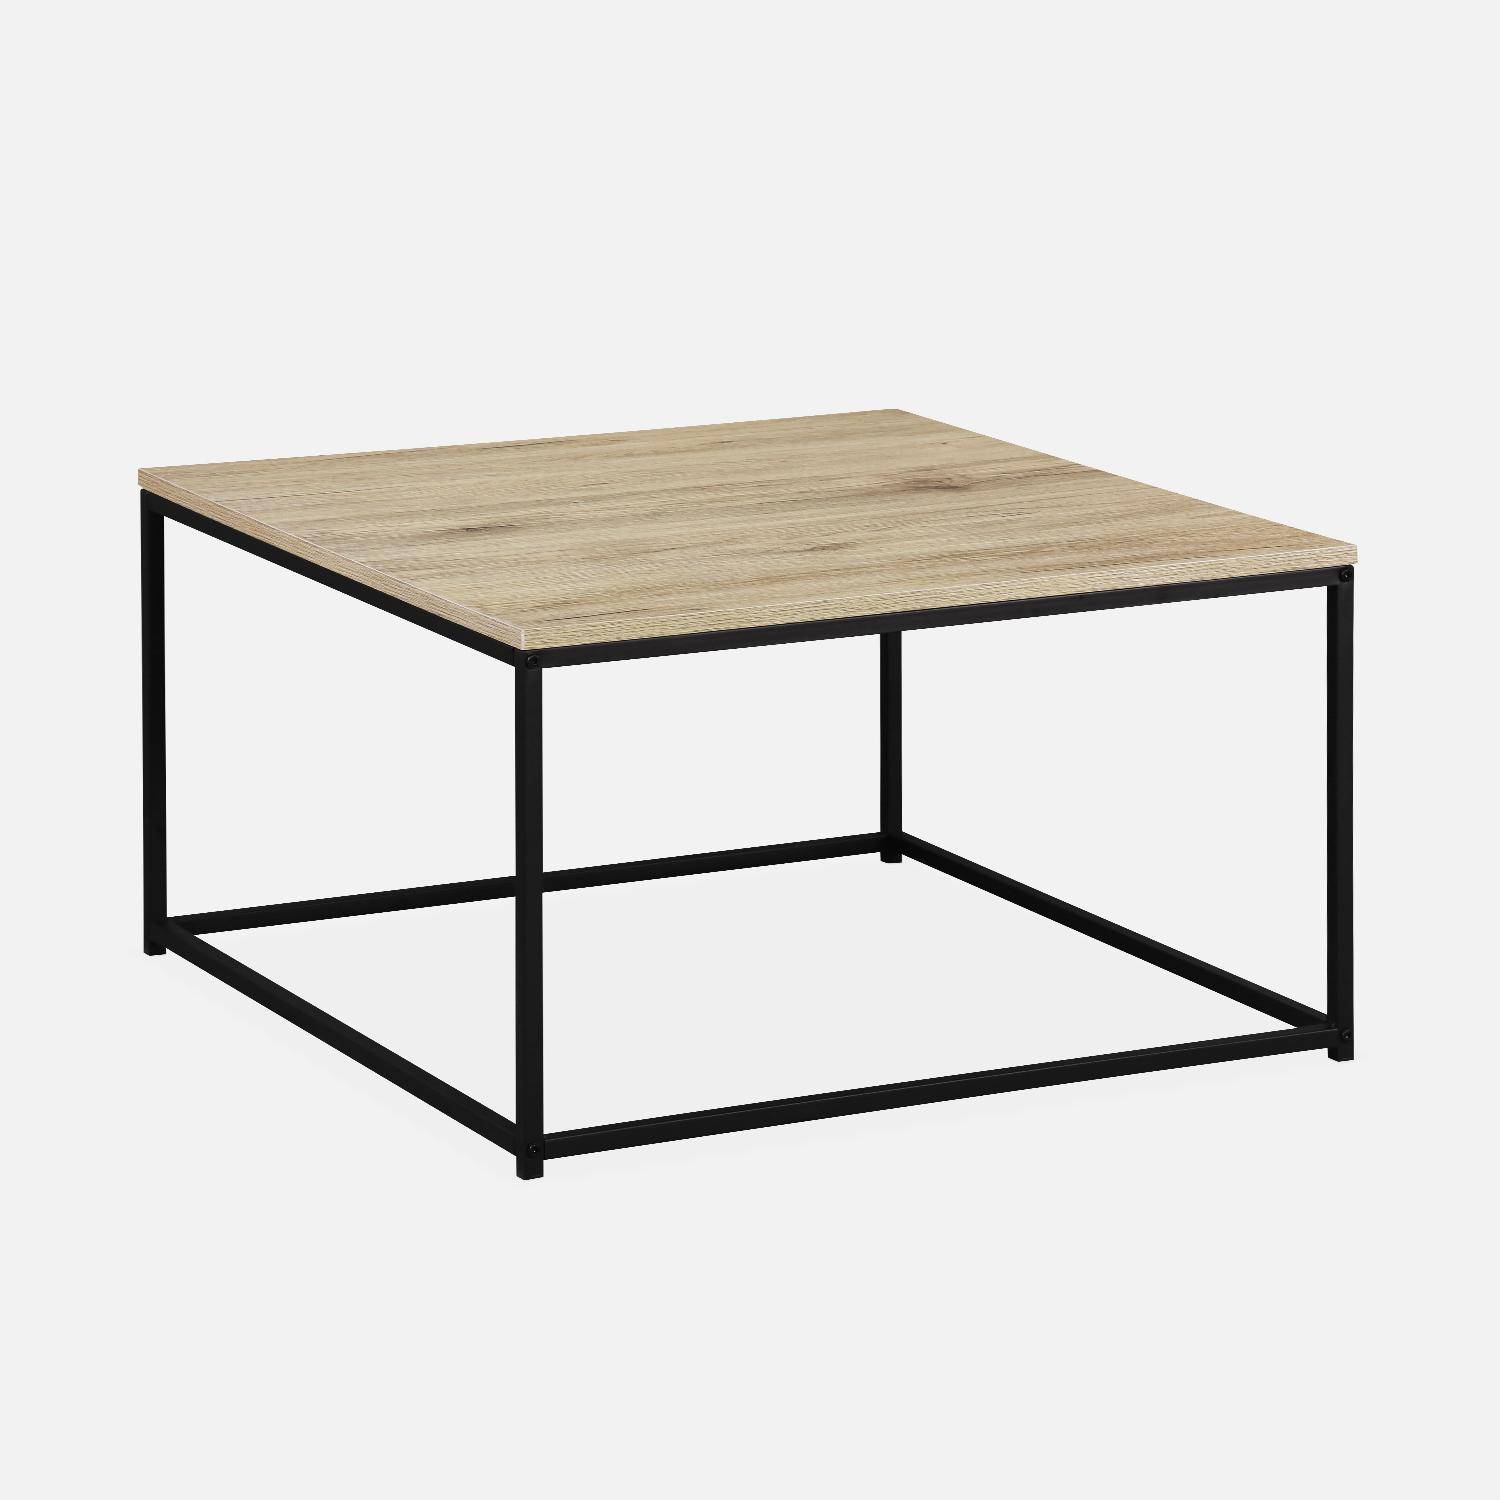 Industrial Square Coffee table, metal, L70cm xW70cmxH40cm Photo3